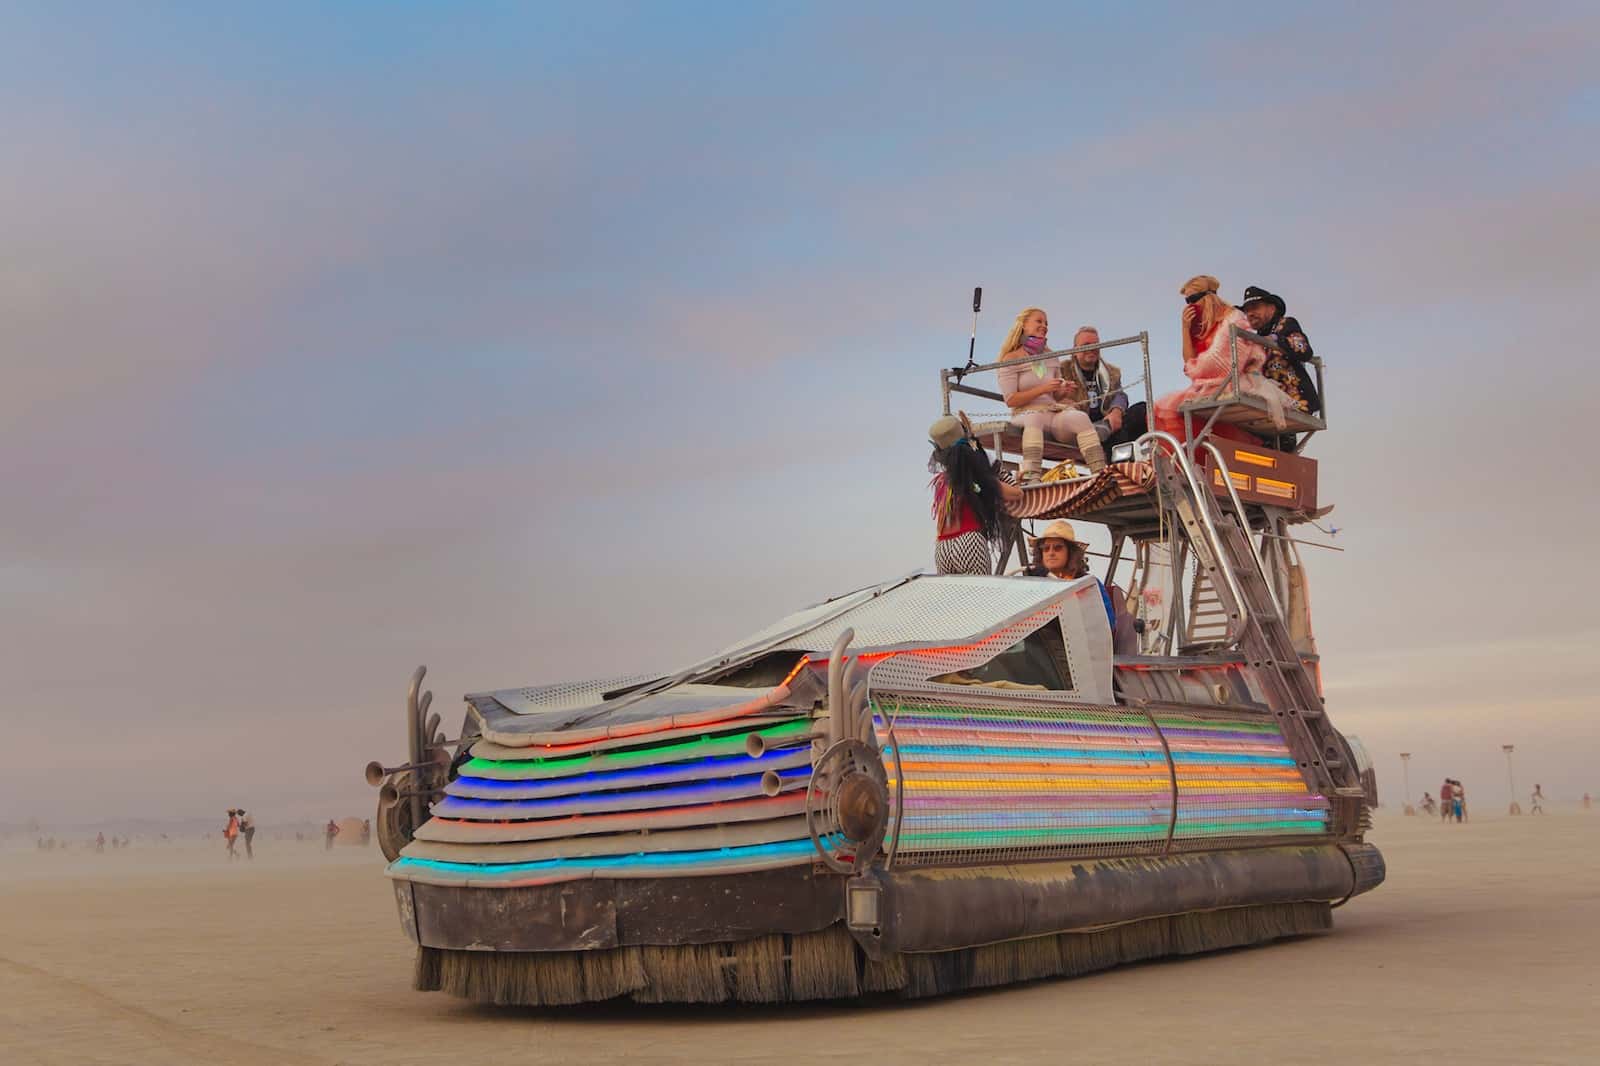 Burning Man facts